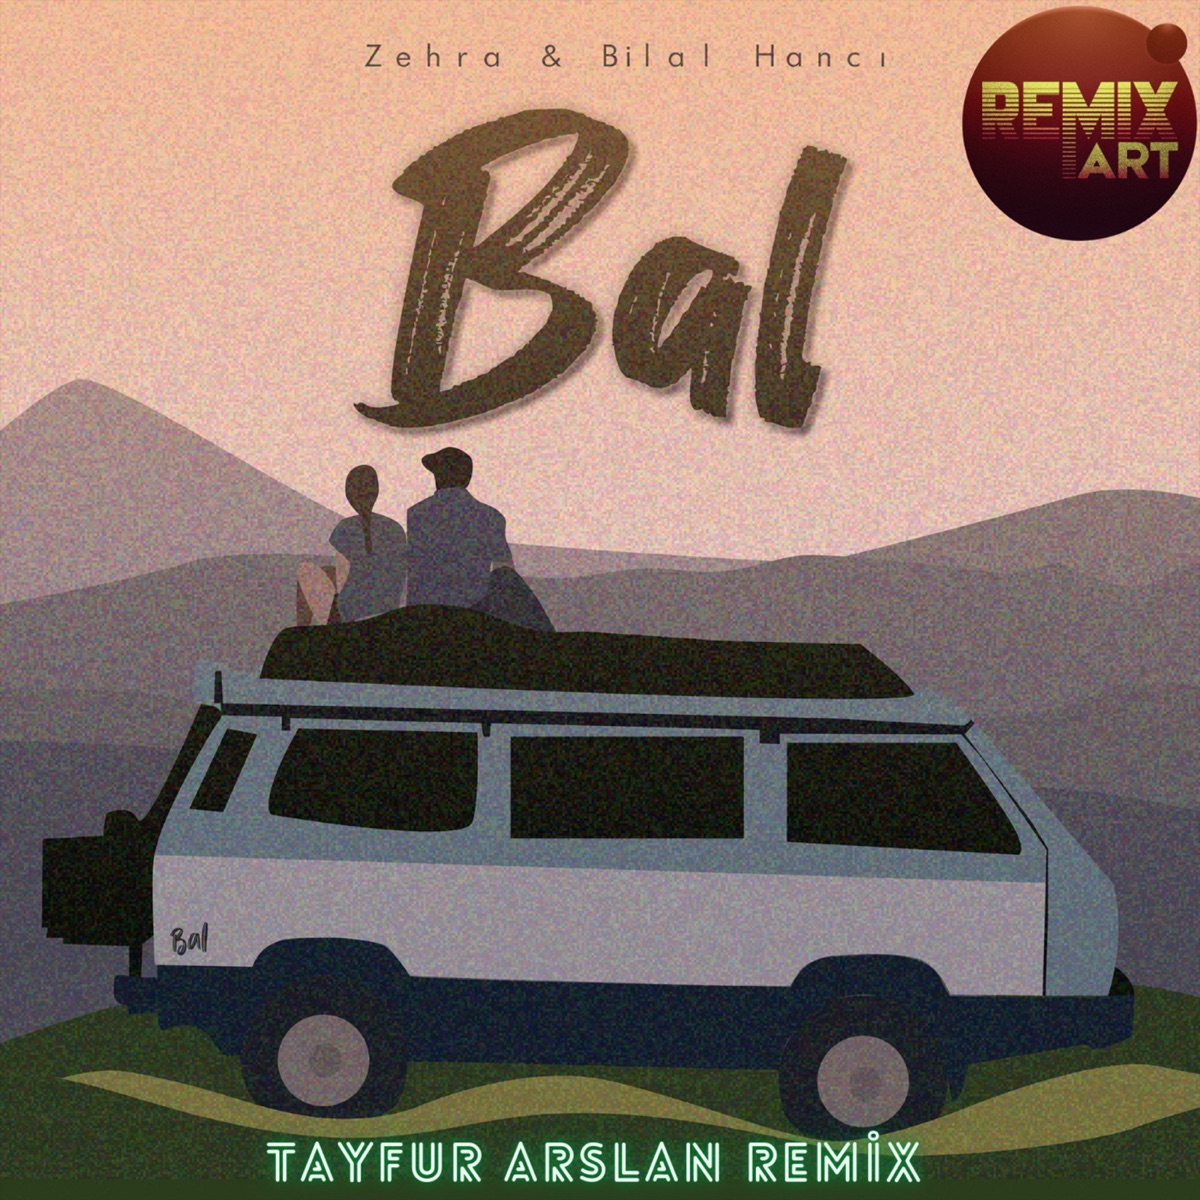 Bal (Tayfur Arslan Remix) [feat. Zehra & Bilal Hancı] - Single - Album by  Tayfur Arslan - Apple Music